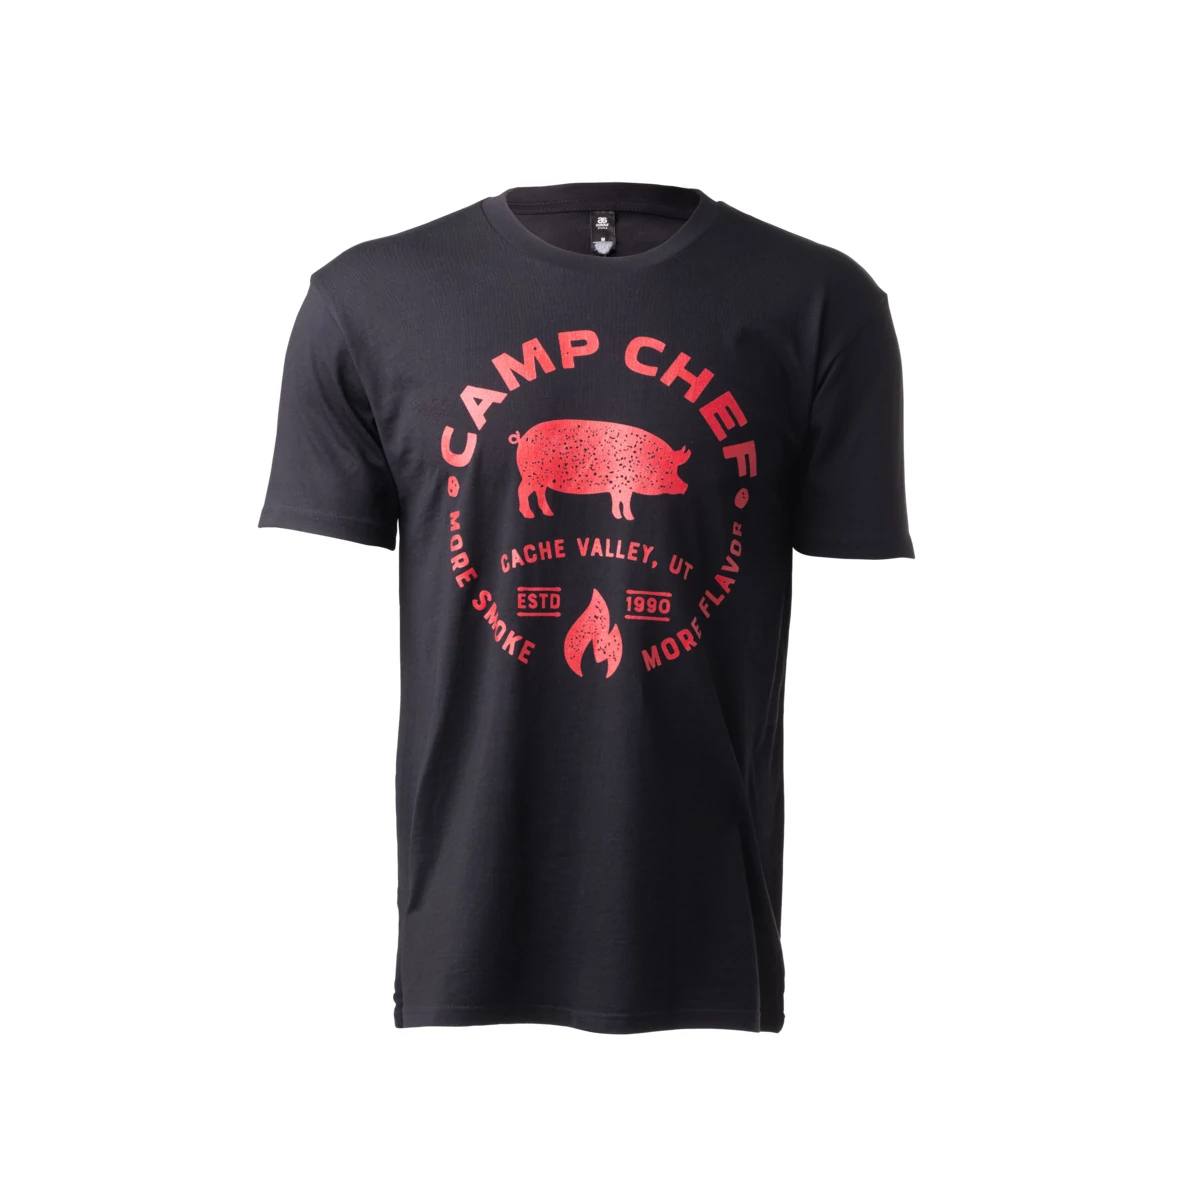 Camp Chef Pork Badge T-Shirt - S